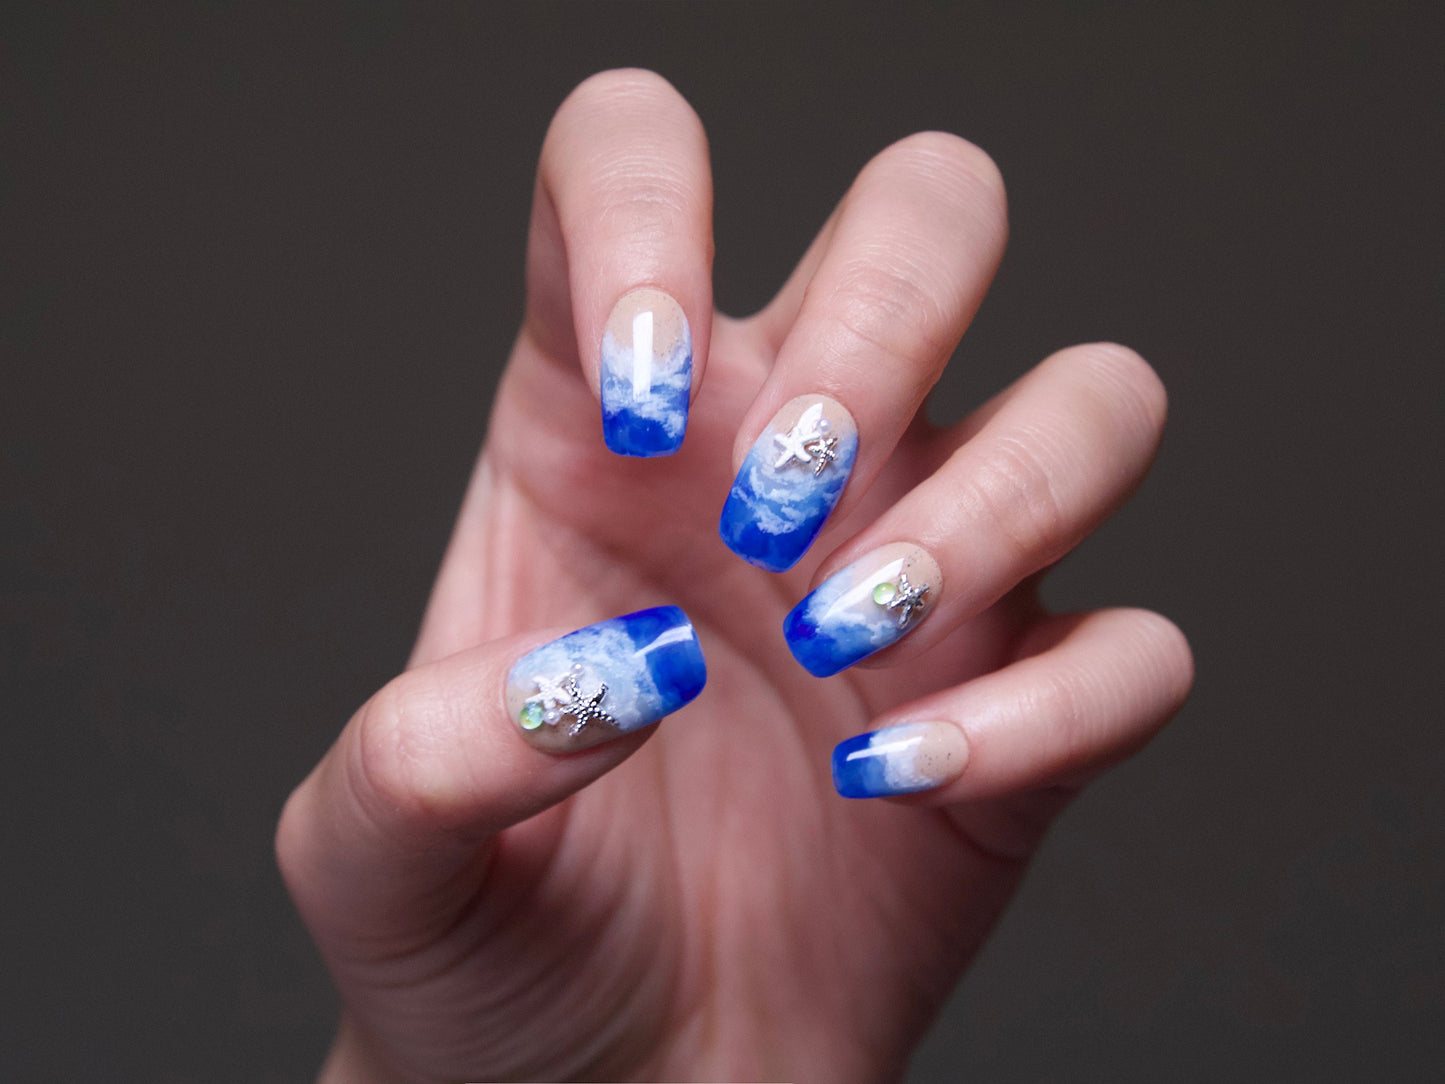 Blue ocean and beach nail design with 3D Sea star nail decoration